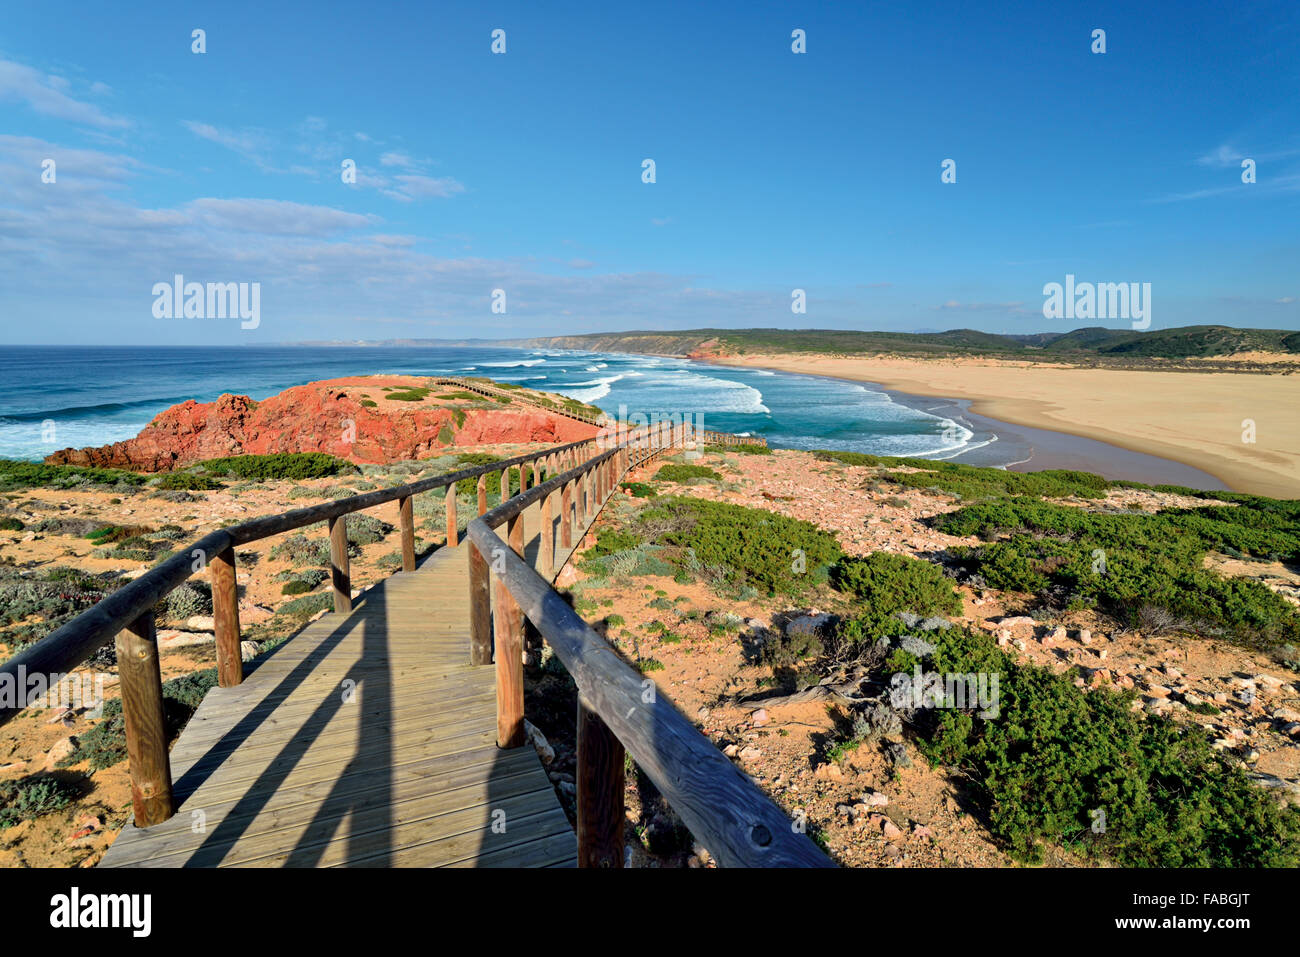 Portugal, Costa Vicentina: Hölzerne Pfad zum Strand Stockfoto